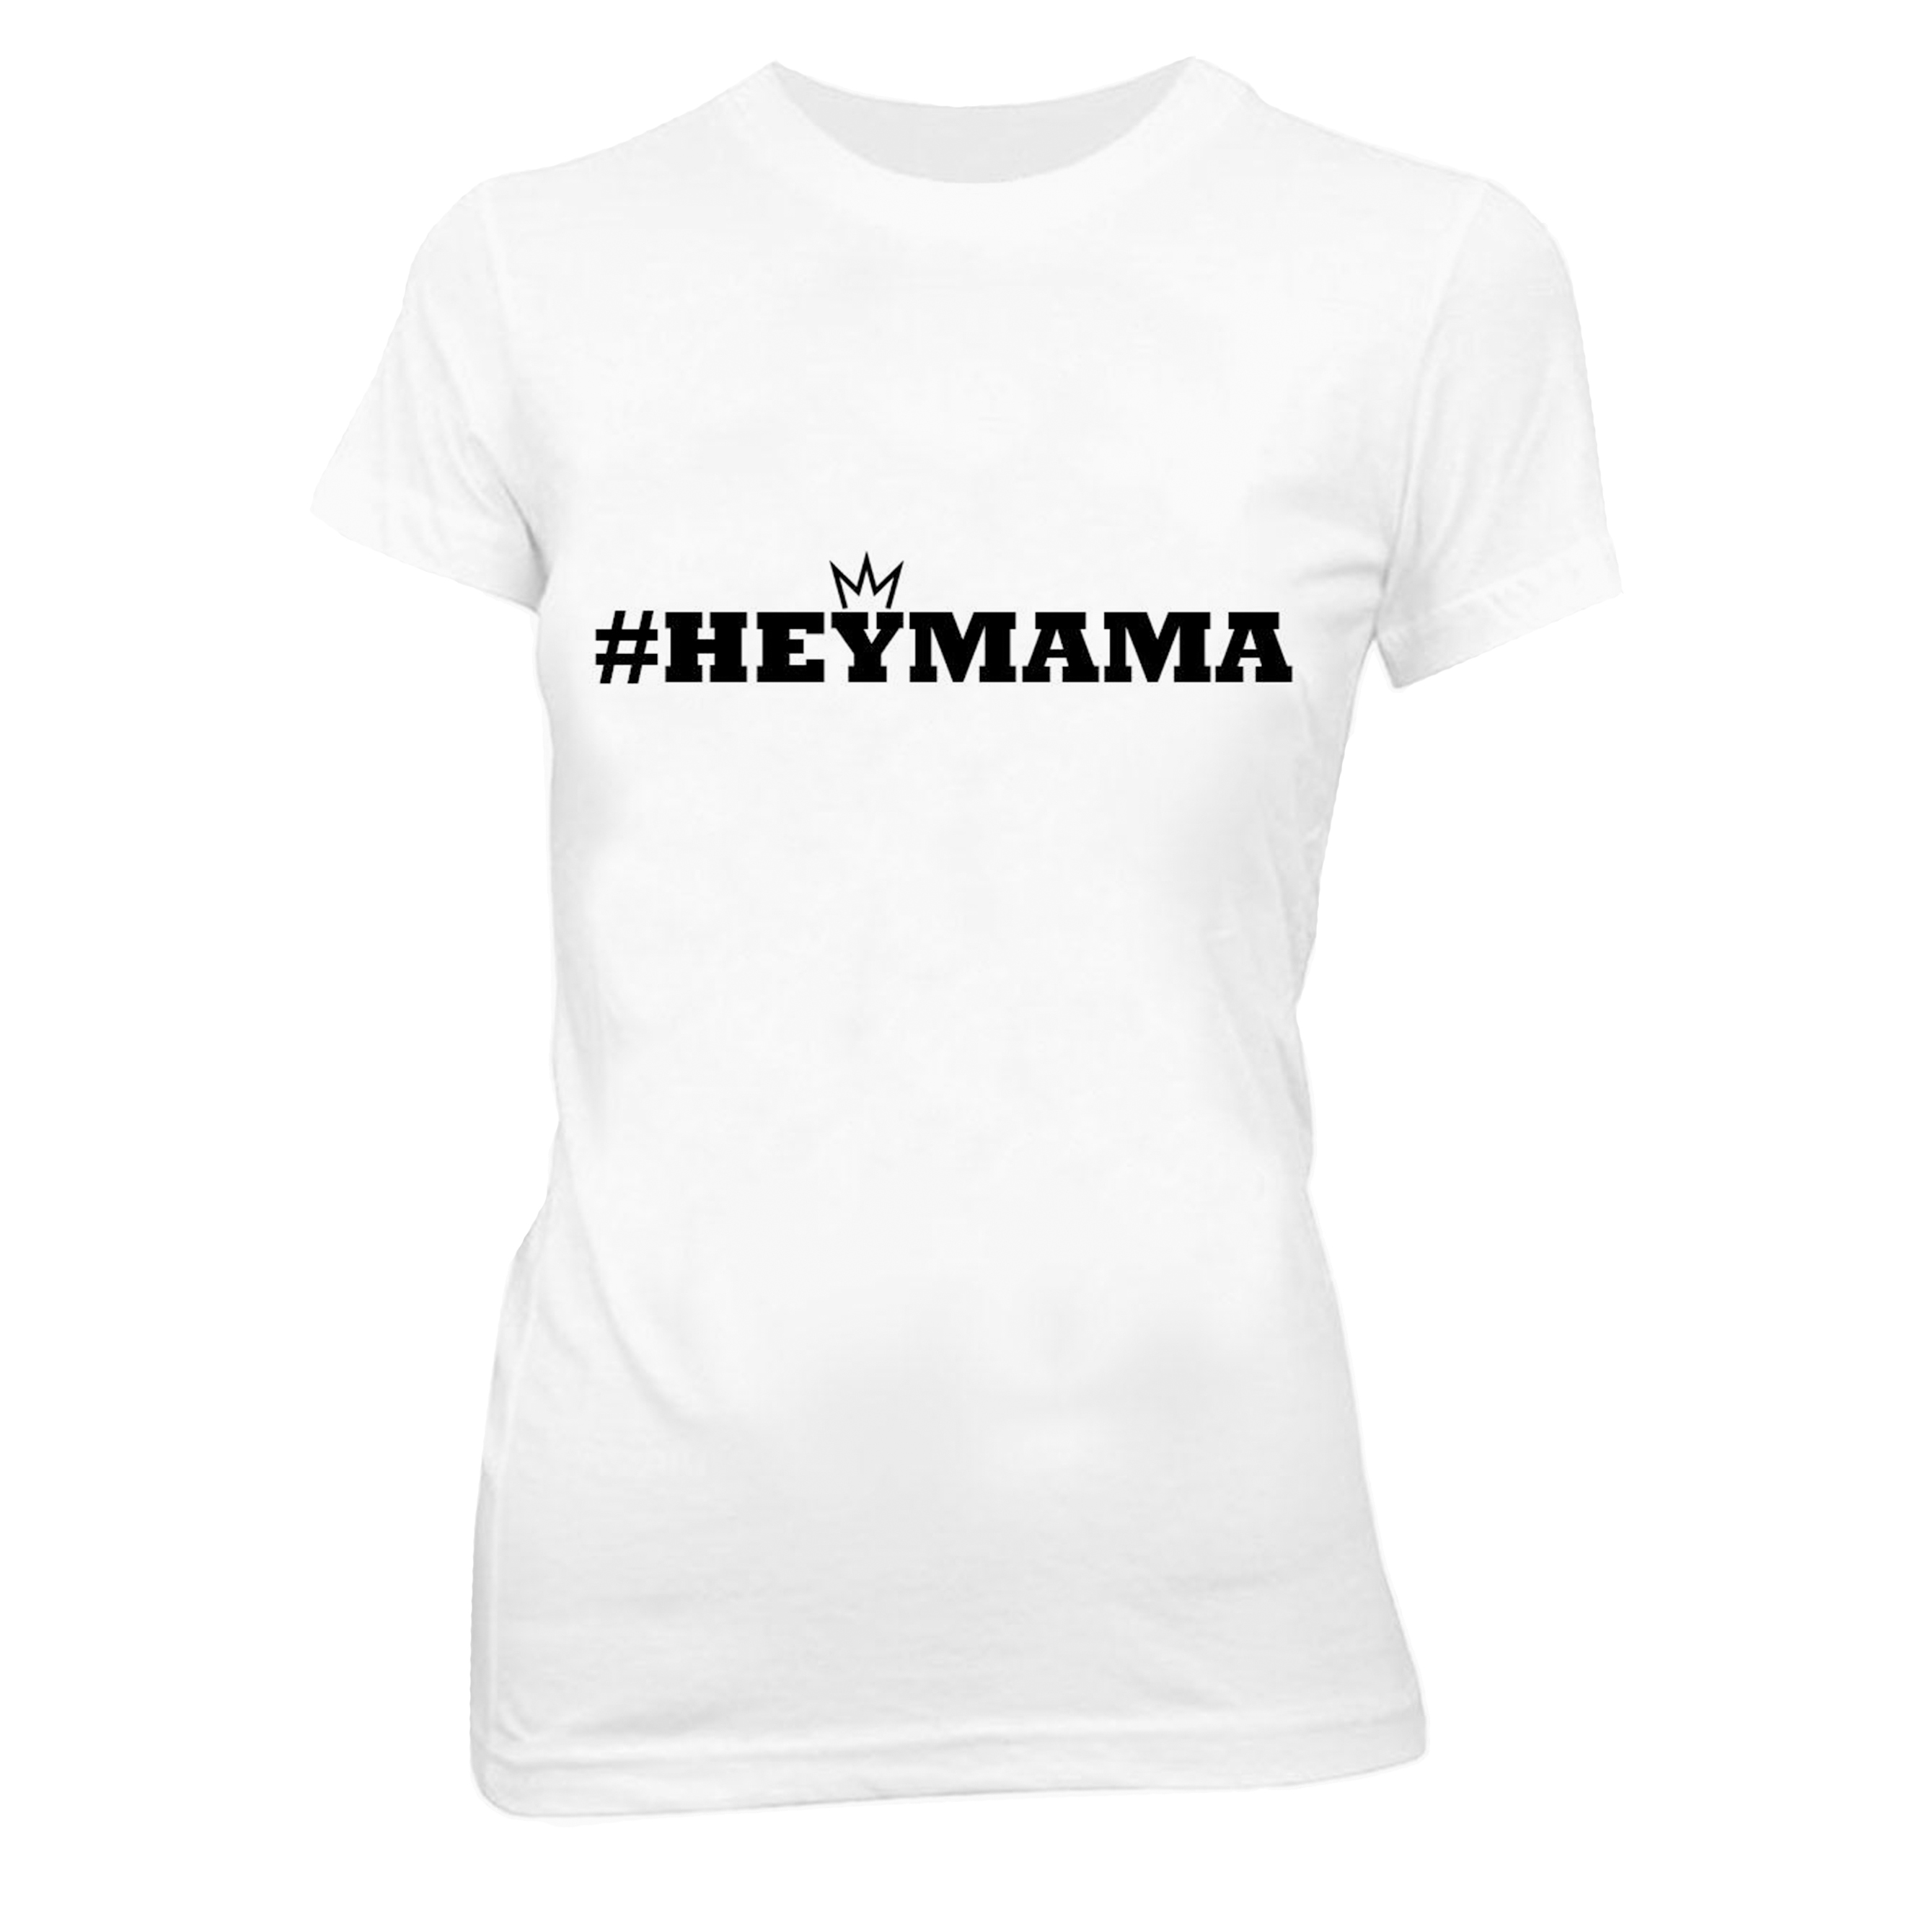 Nicki Minaj Women's "#HEYMAMA" Tee